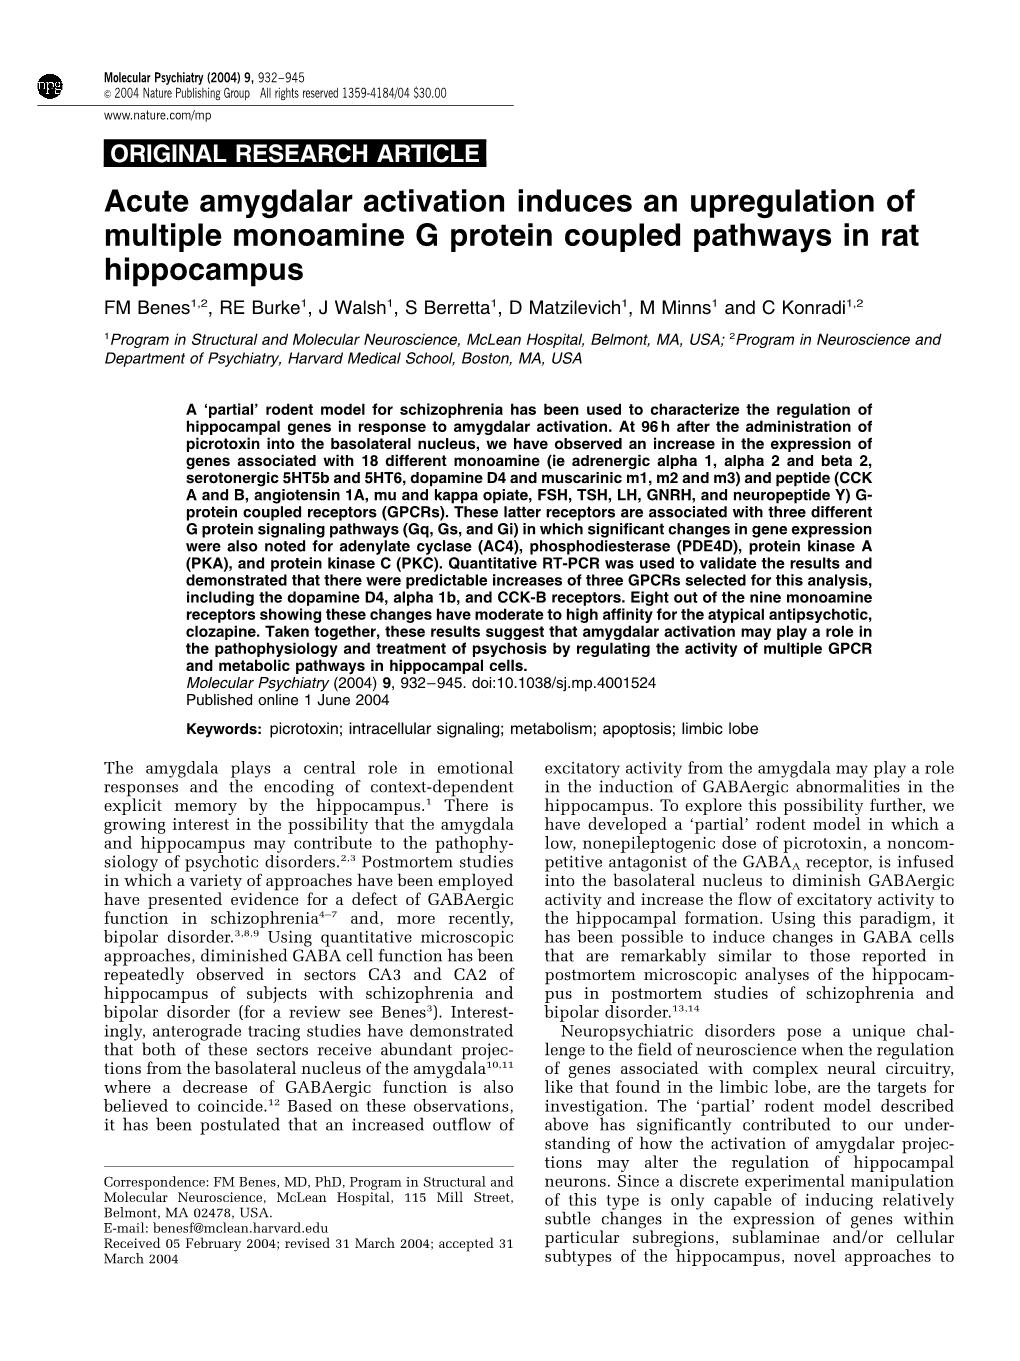 Acute Amygdalar Activation Induces an Upregulation of Multiple